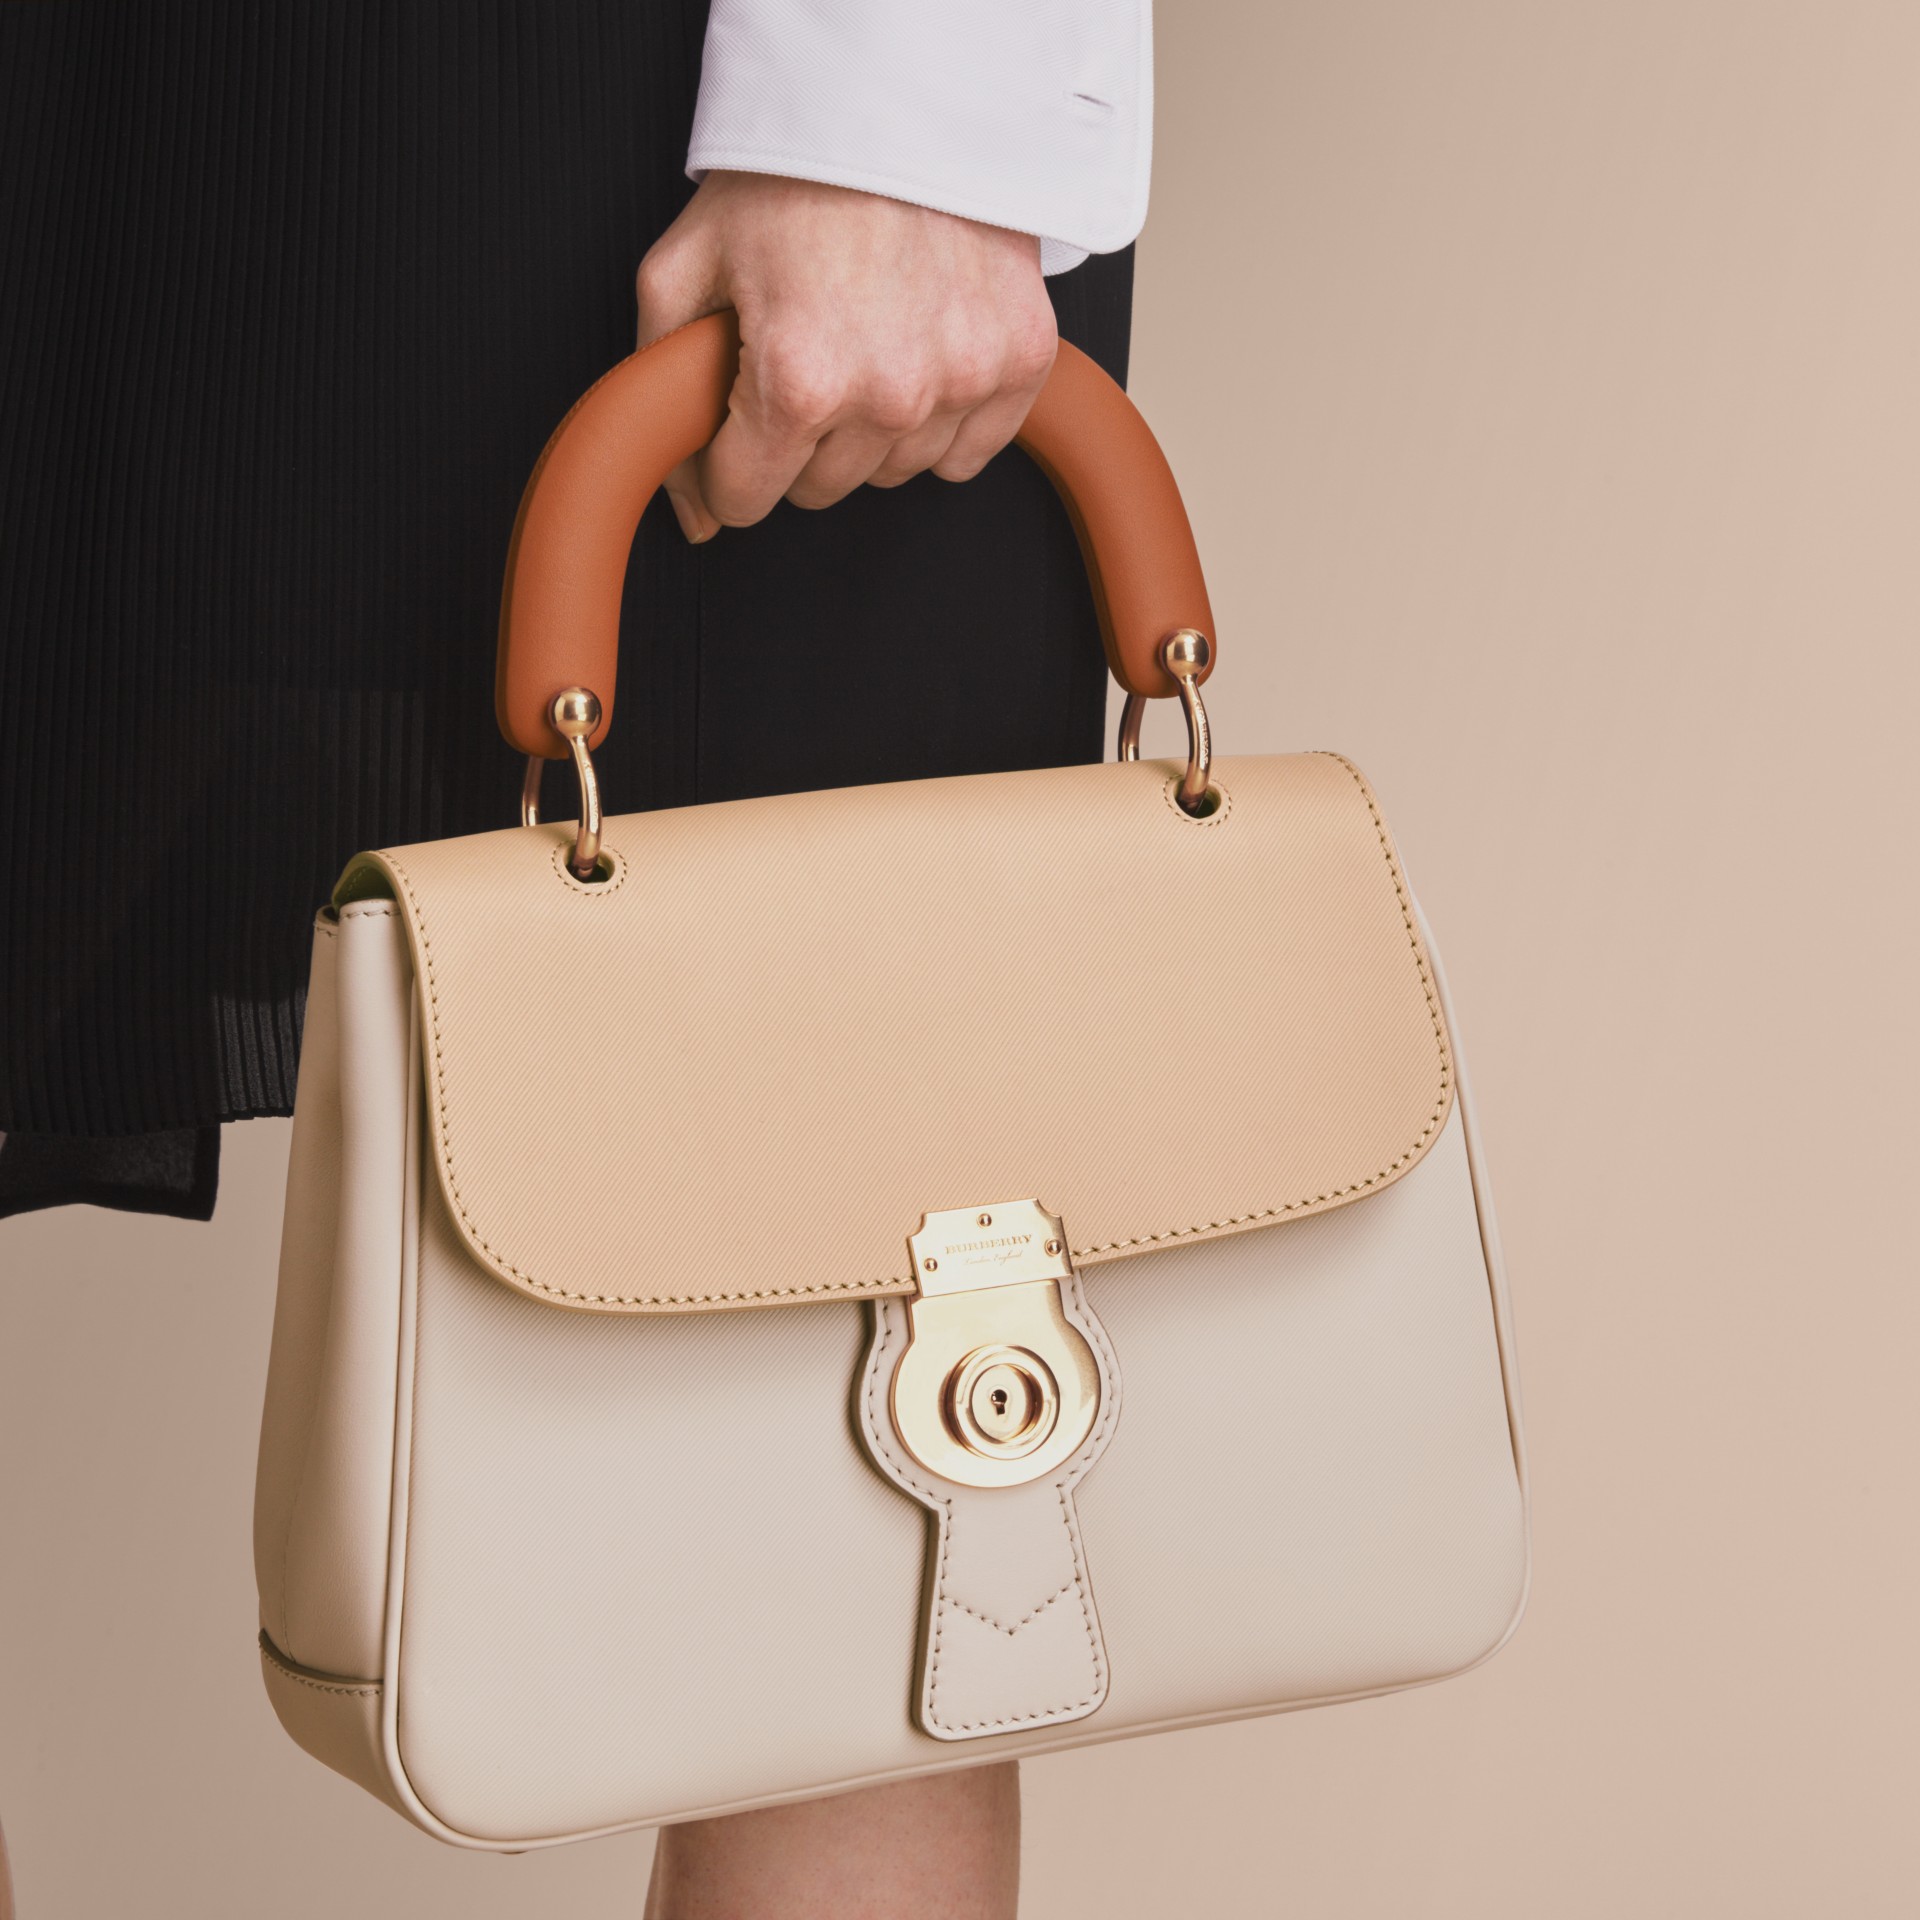 Interesse polet Medicin Say Hello to The New It-Bag: Burberry's DK88 Handbag | SPY